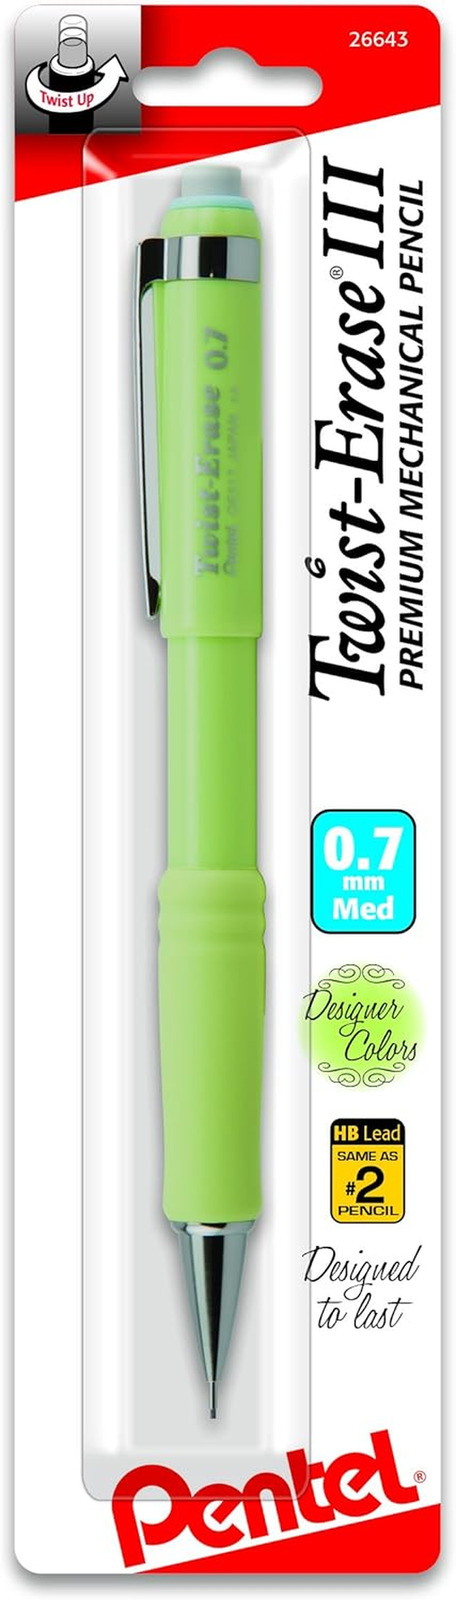 Pentel Twist-Erase III Mechanical Pencil (0.7mm) 1-Pk - Fashion Colors